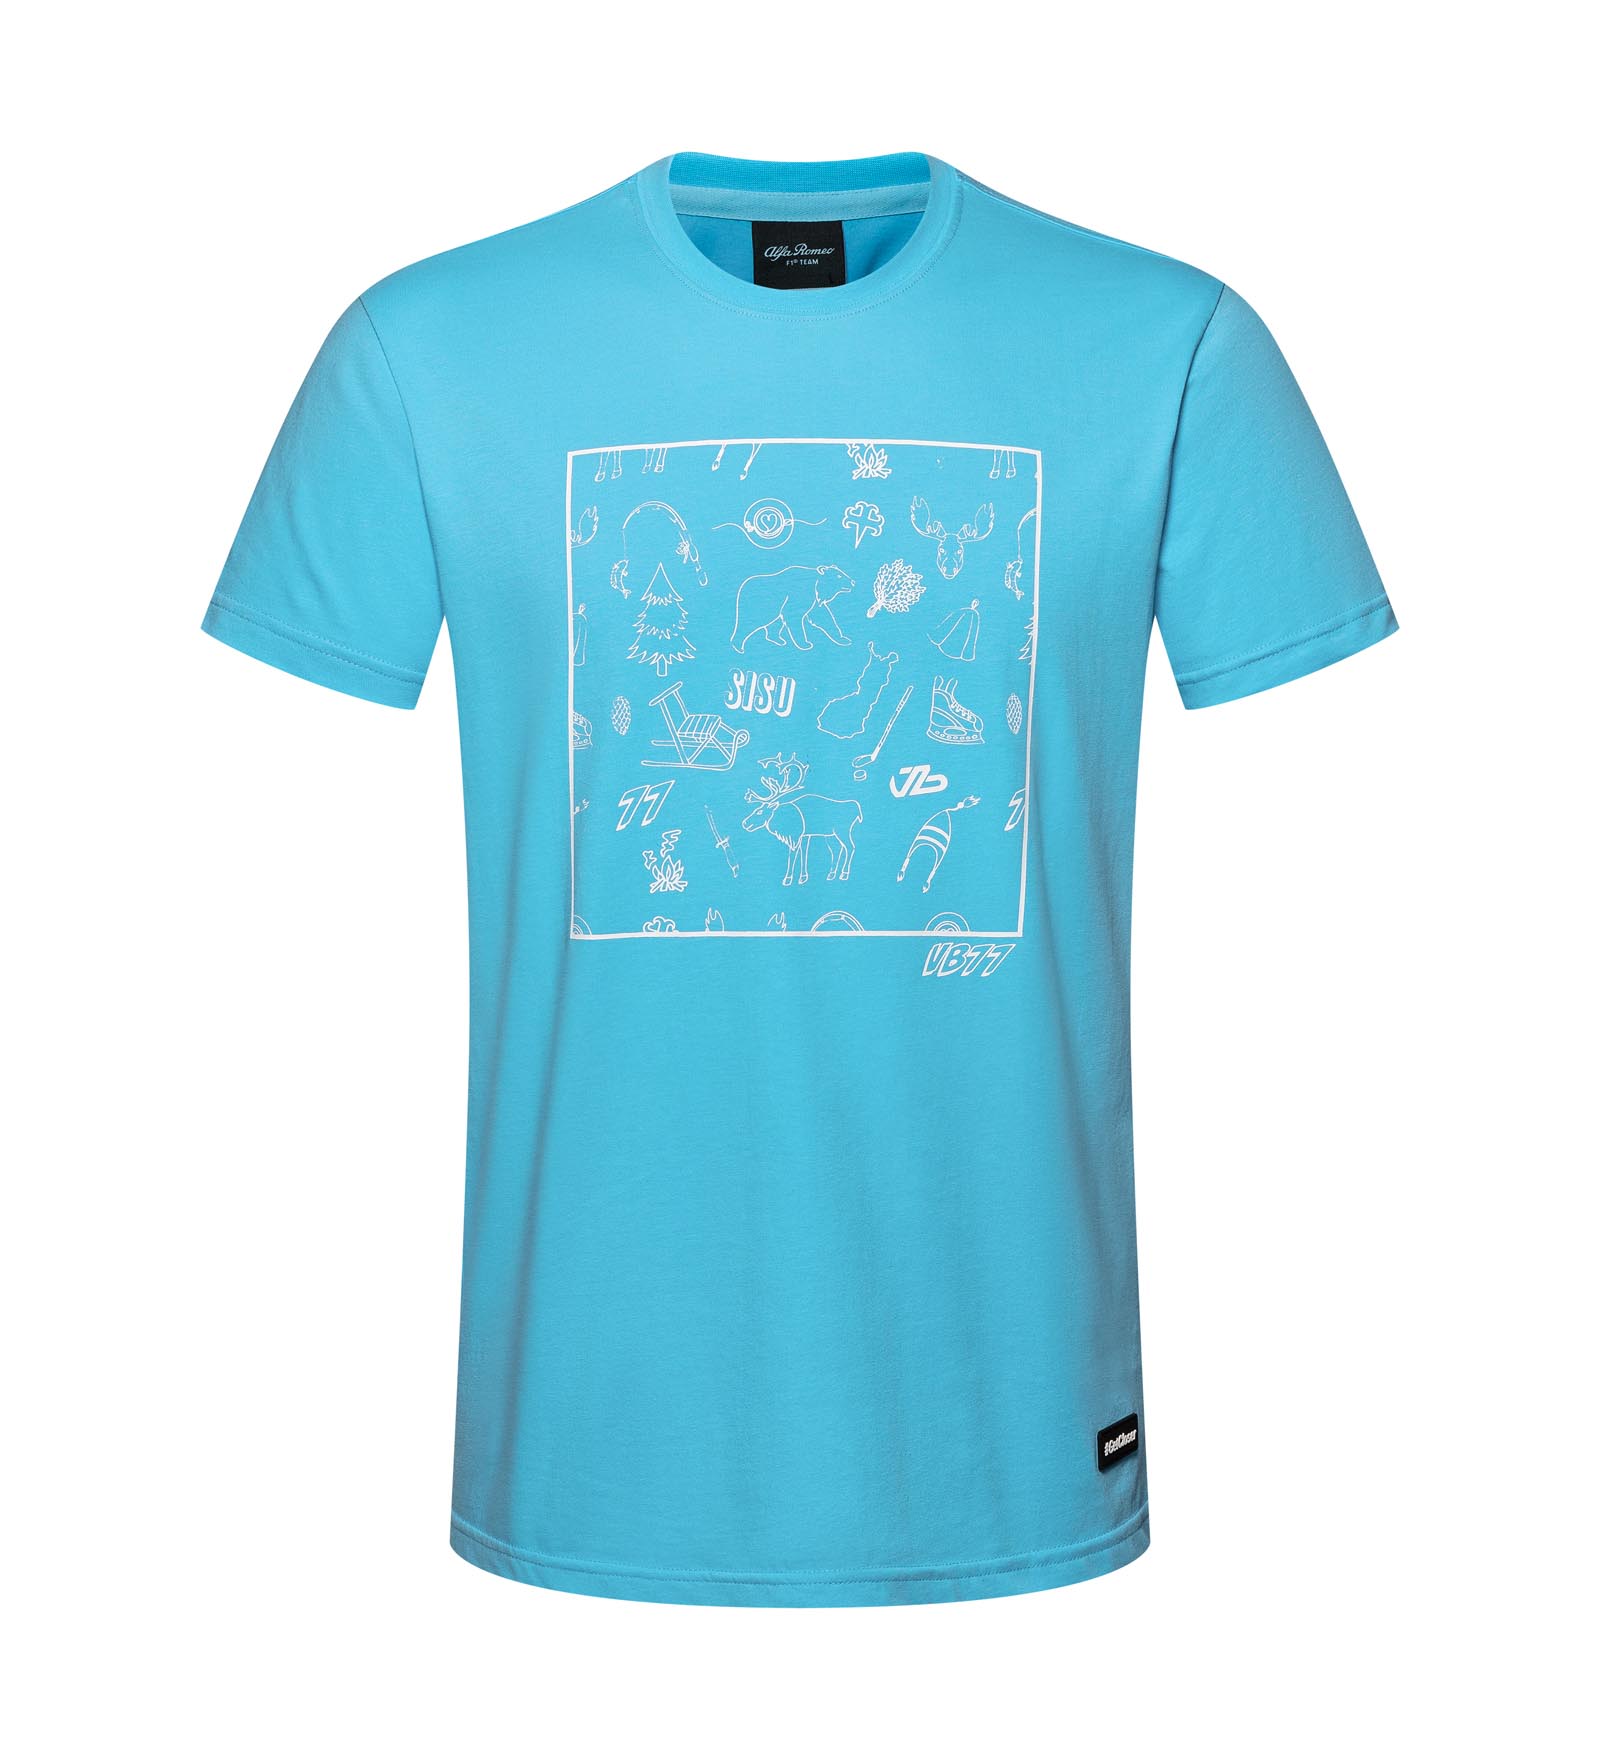 T-Shirt #TeamBottas Blue3XL Valtteri Bottas